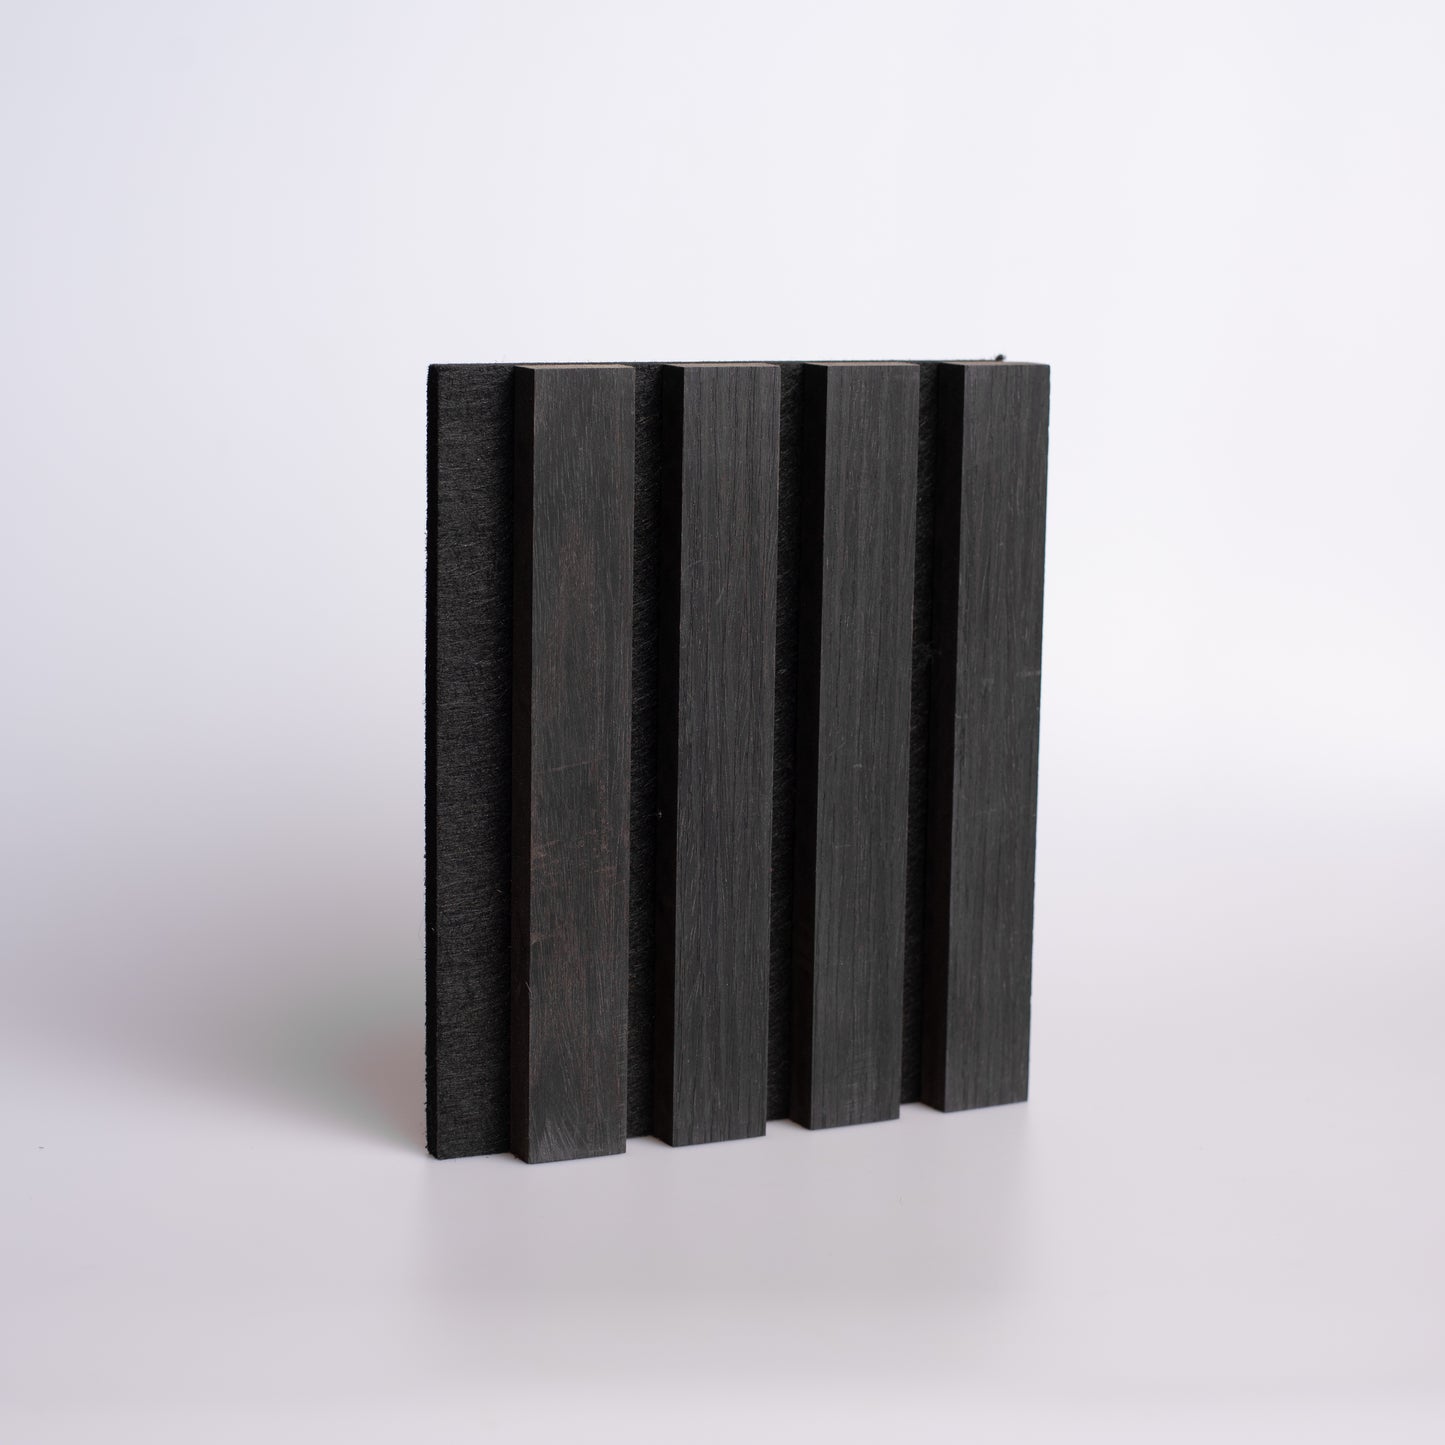 Sample size of NüBatten's Charcoal Oak Wood Slat Panel